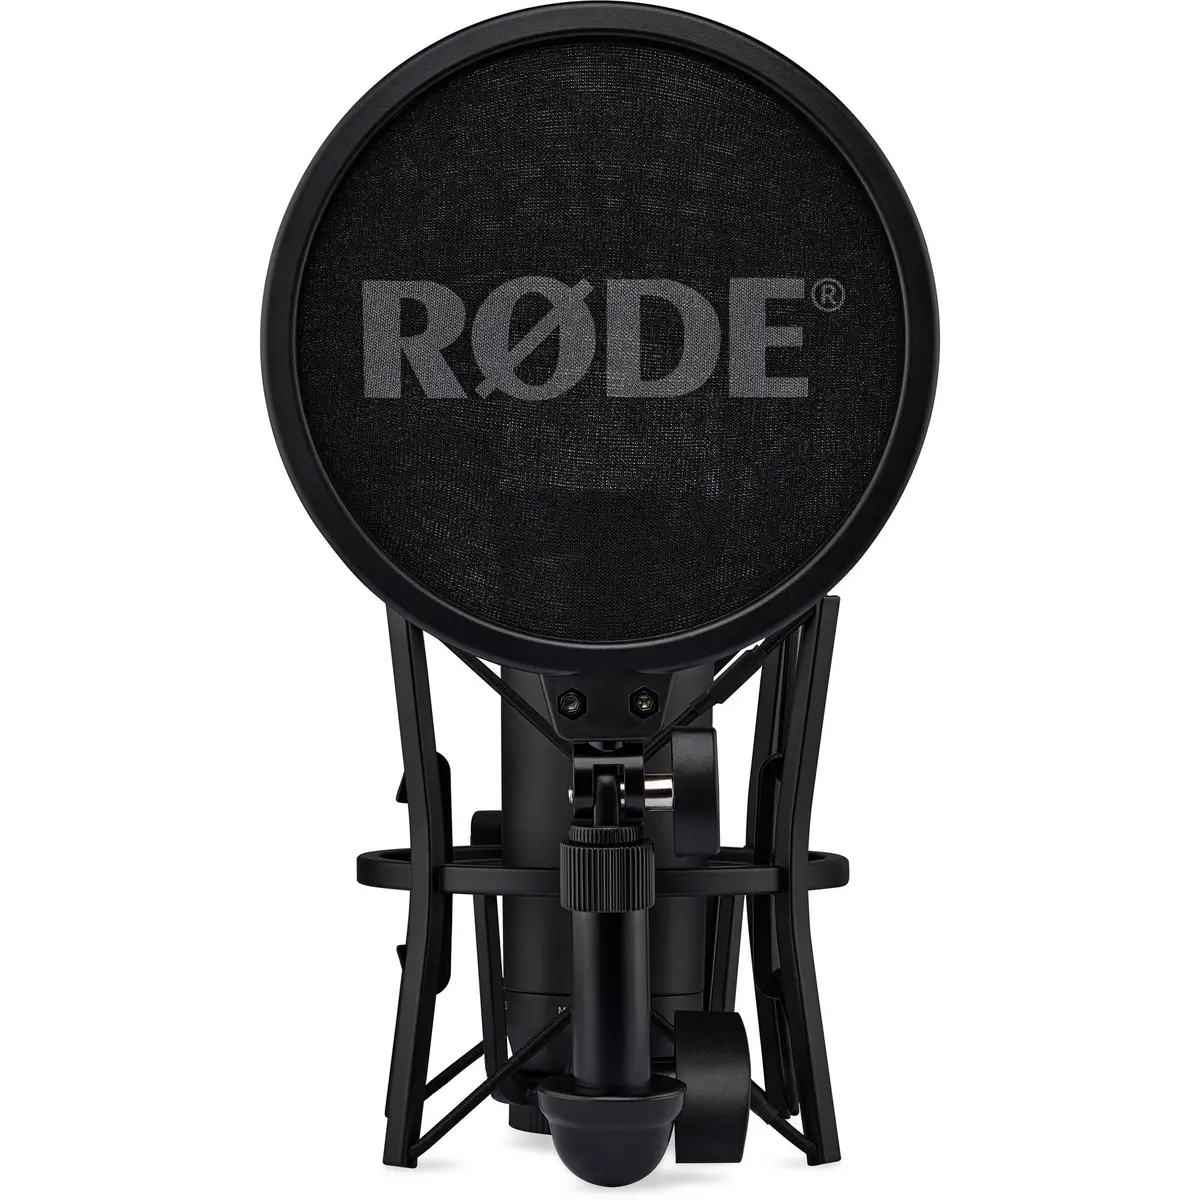 2. Rode NT1 5th Generation Hybrid Microphone (Black)